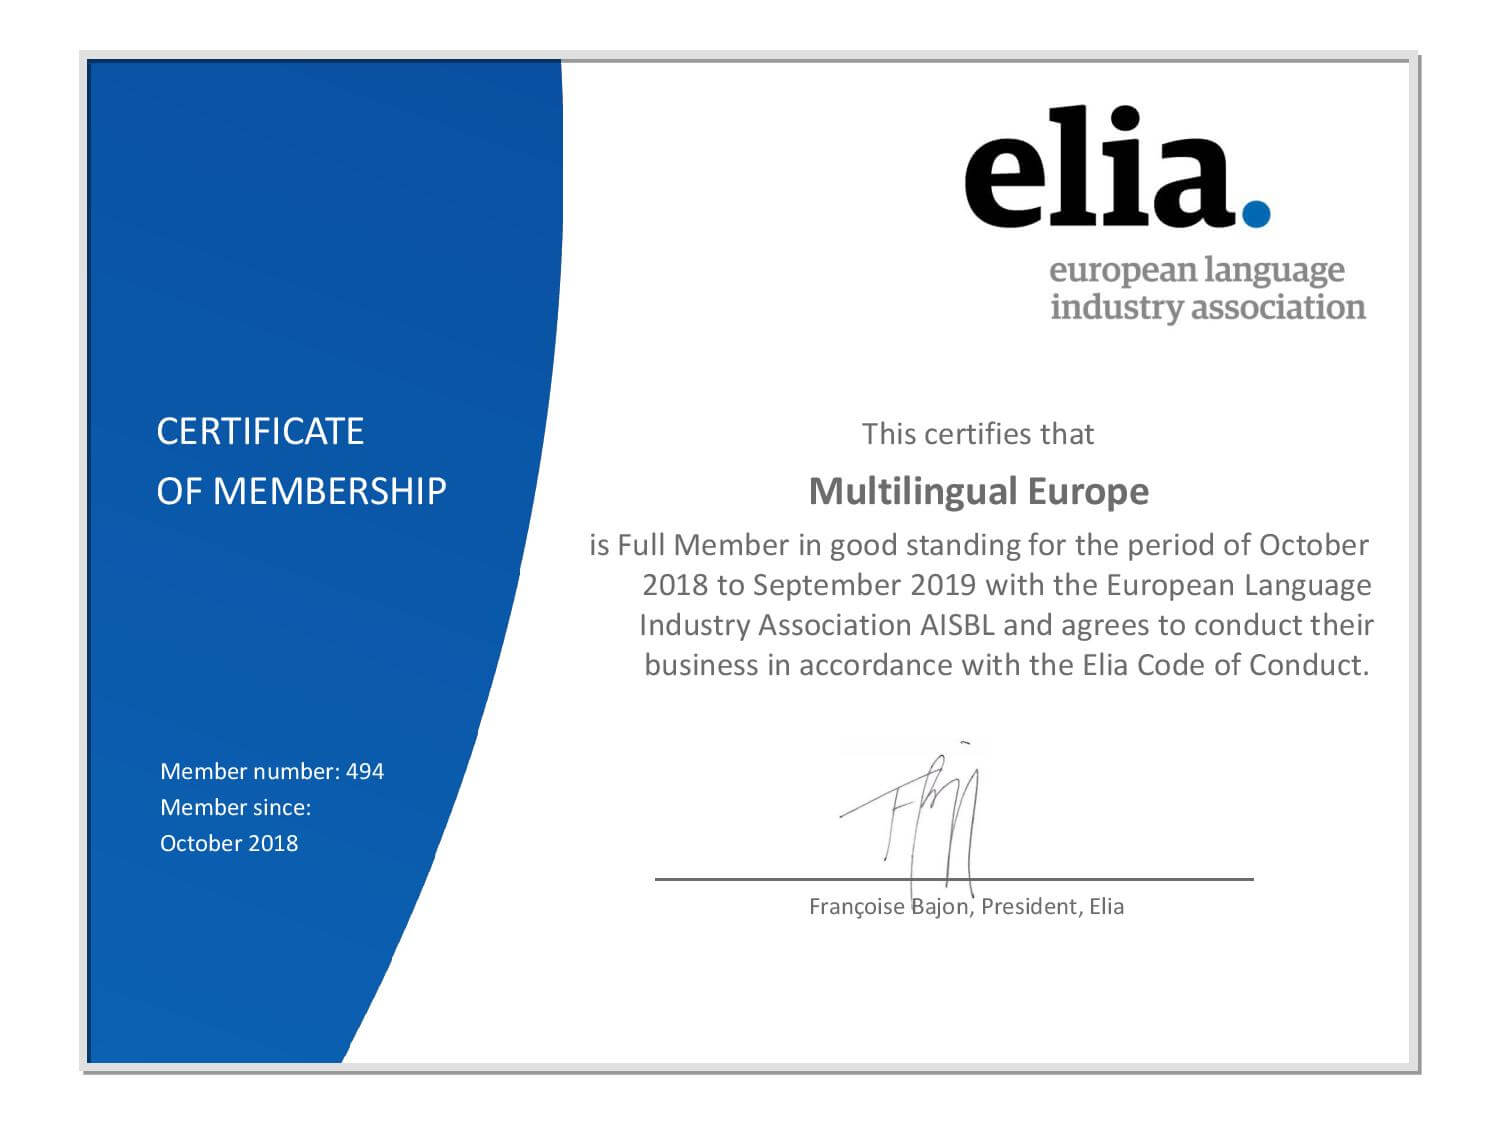 ELIA - European Language Industry Association